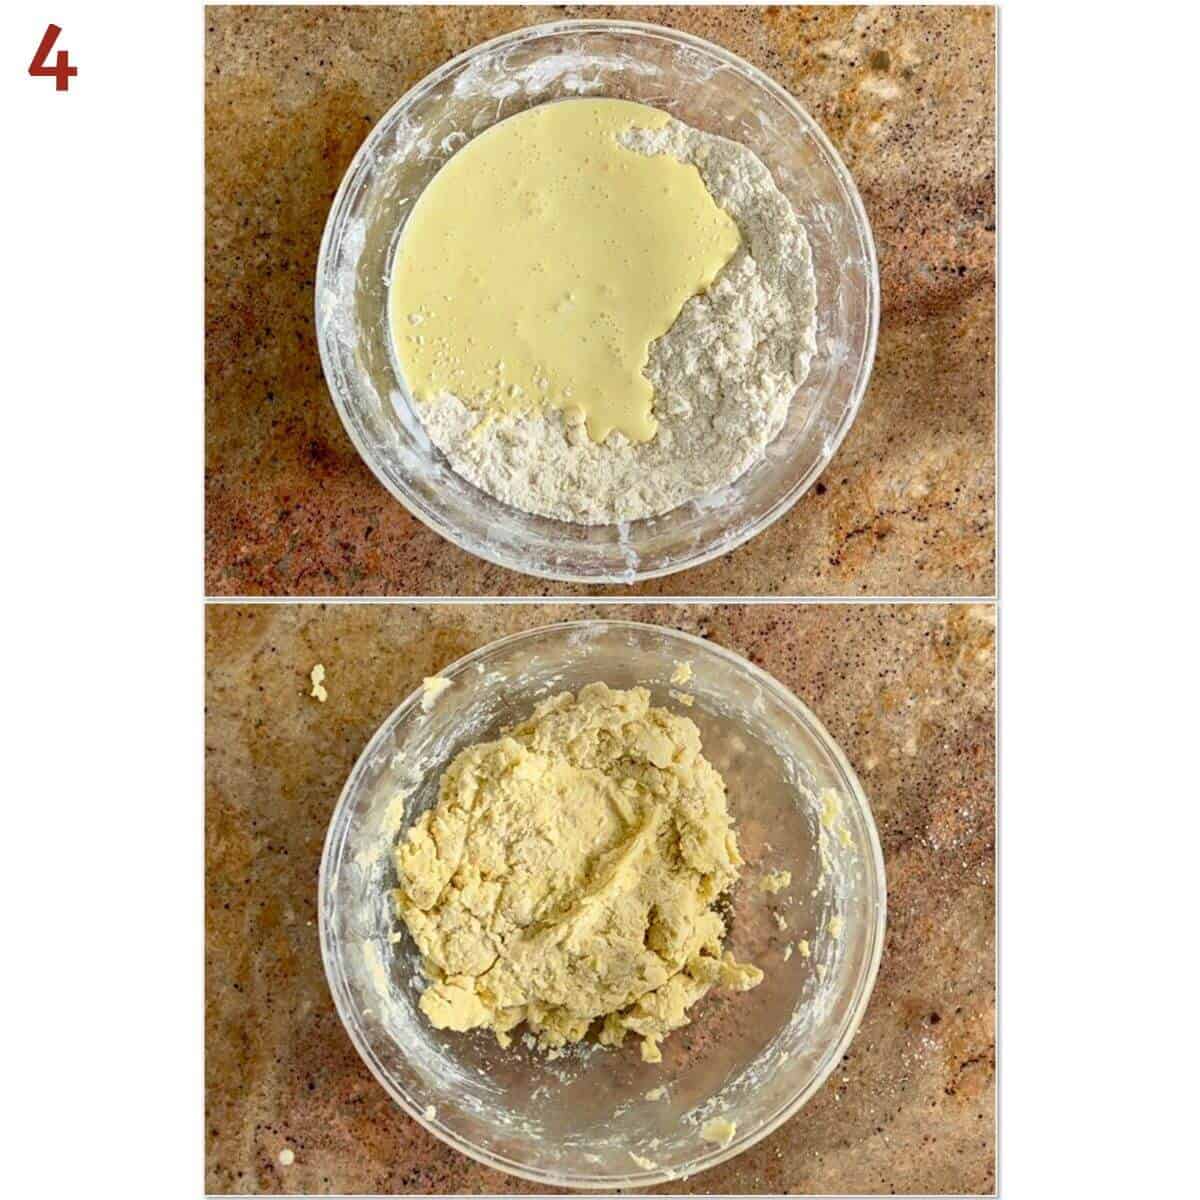 Collage of adding heavy cream mixture to flour mixture to make scone dough.